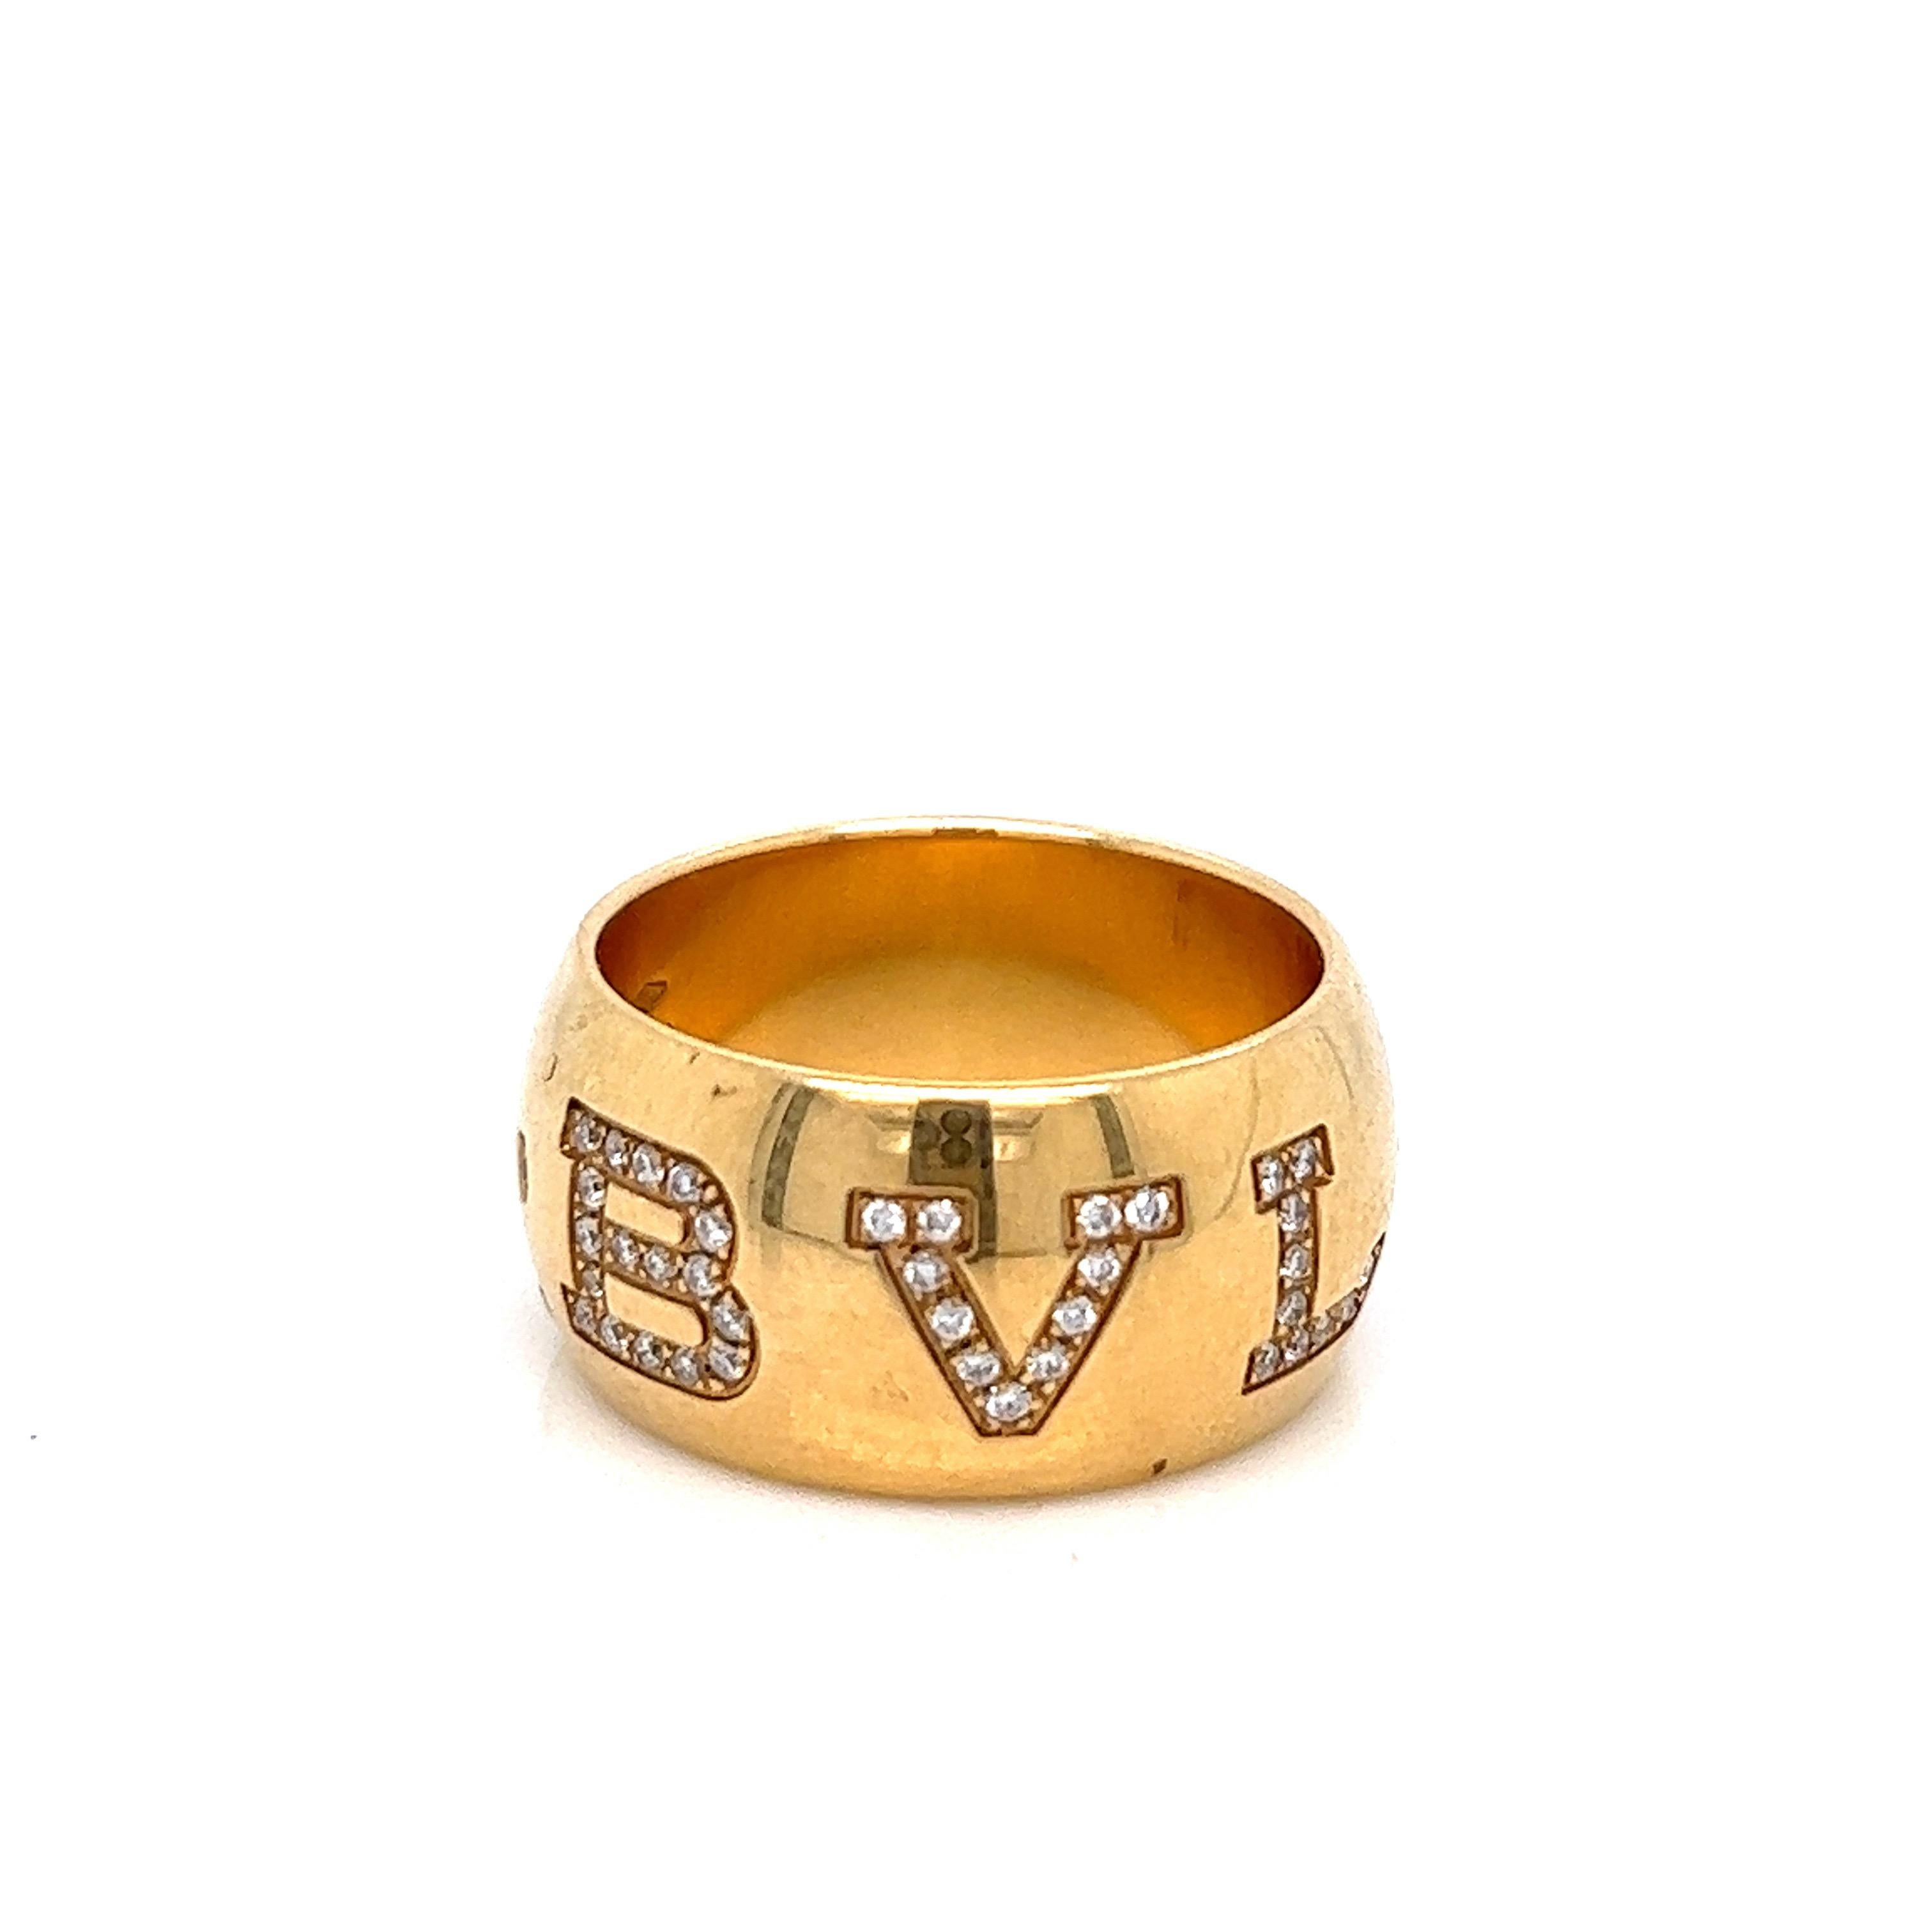 Bvlgari yellow gold diamond band ring

BVLGARI in tiny round-cut diamonds, 18 karat yellow gold; marked 750, 52, Made in Italy, 2337 AL

Size: 6 US
Total weight: 12.7 grams